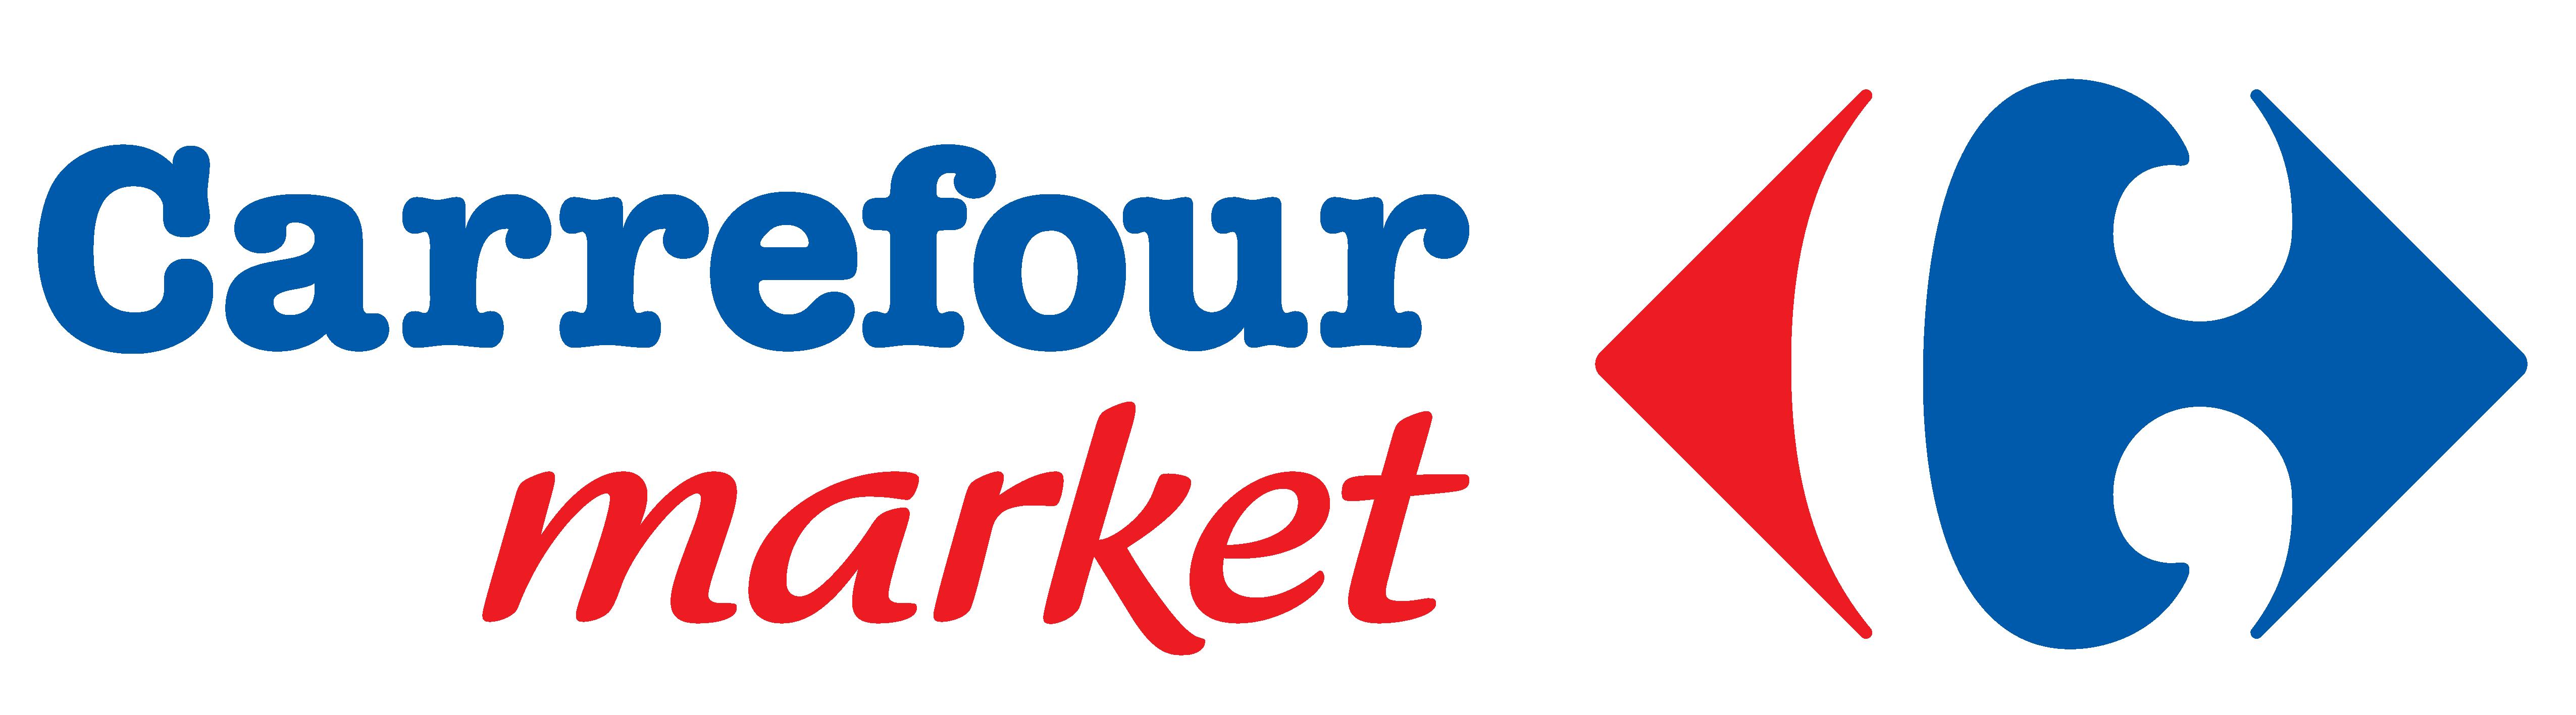 Carrefour Market Logopedia The Logo And Branding Site